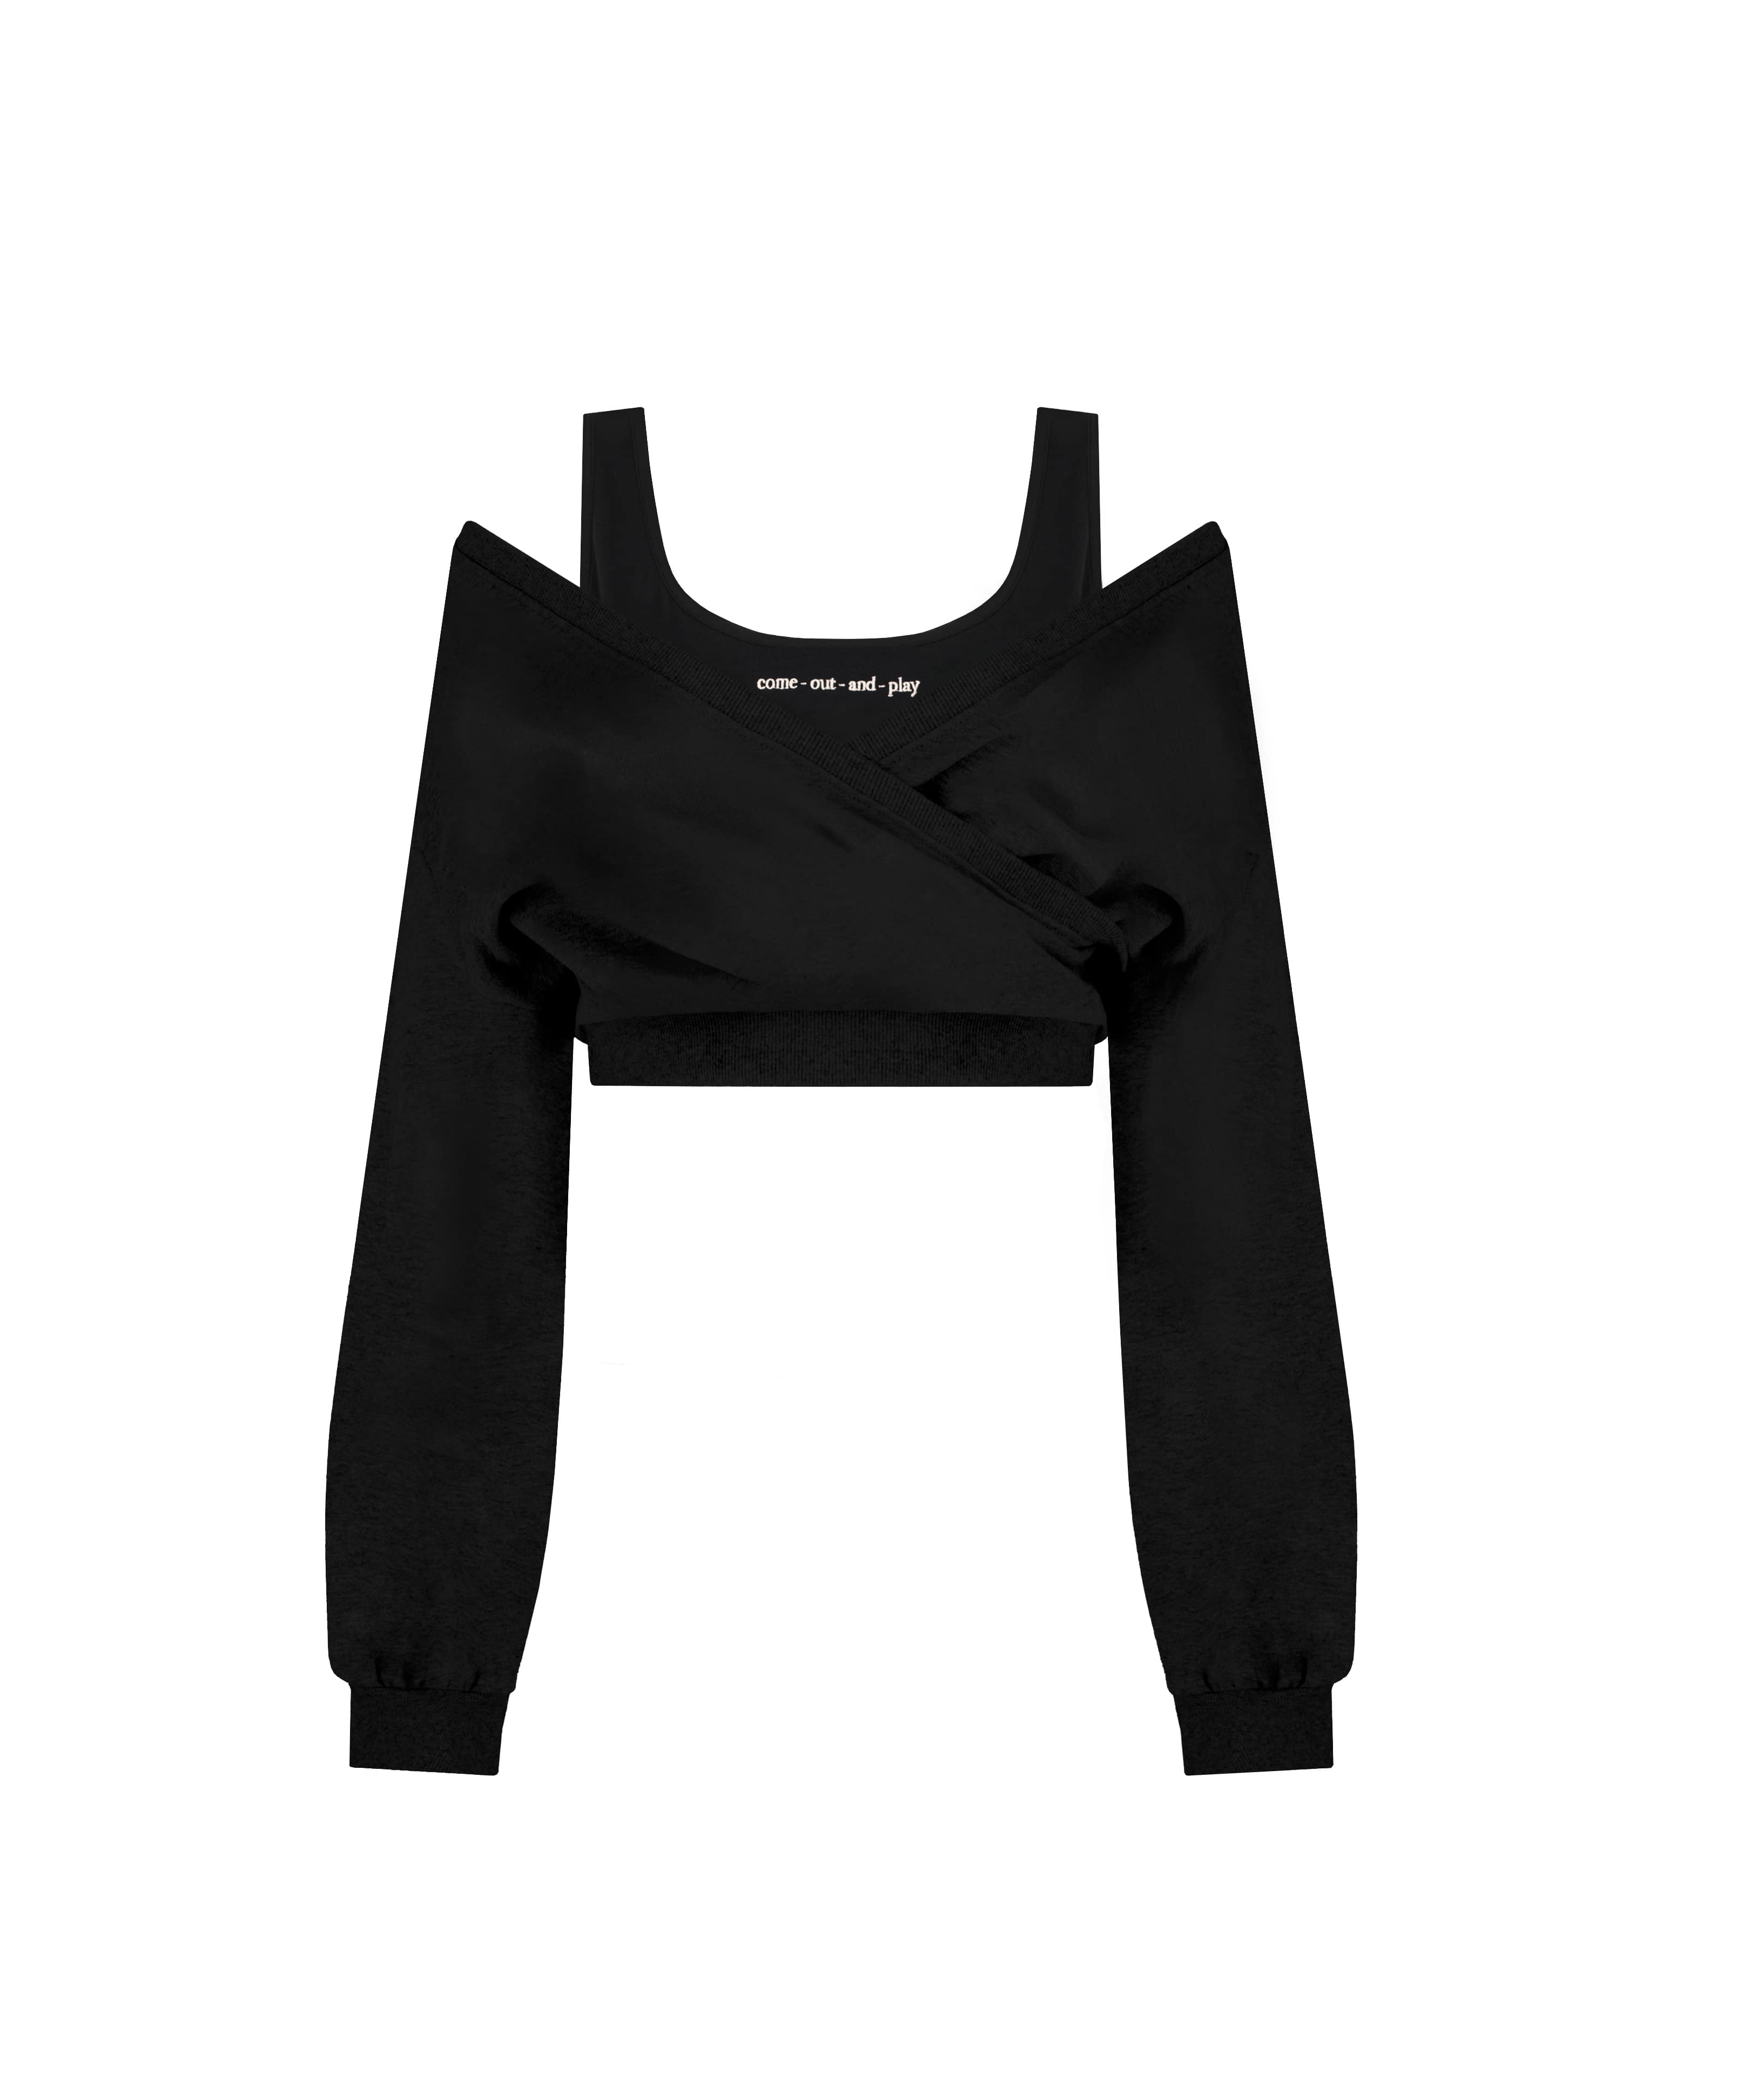 [Made] Layered Basic sweatshirts